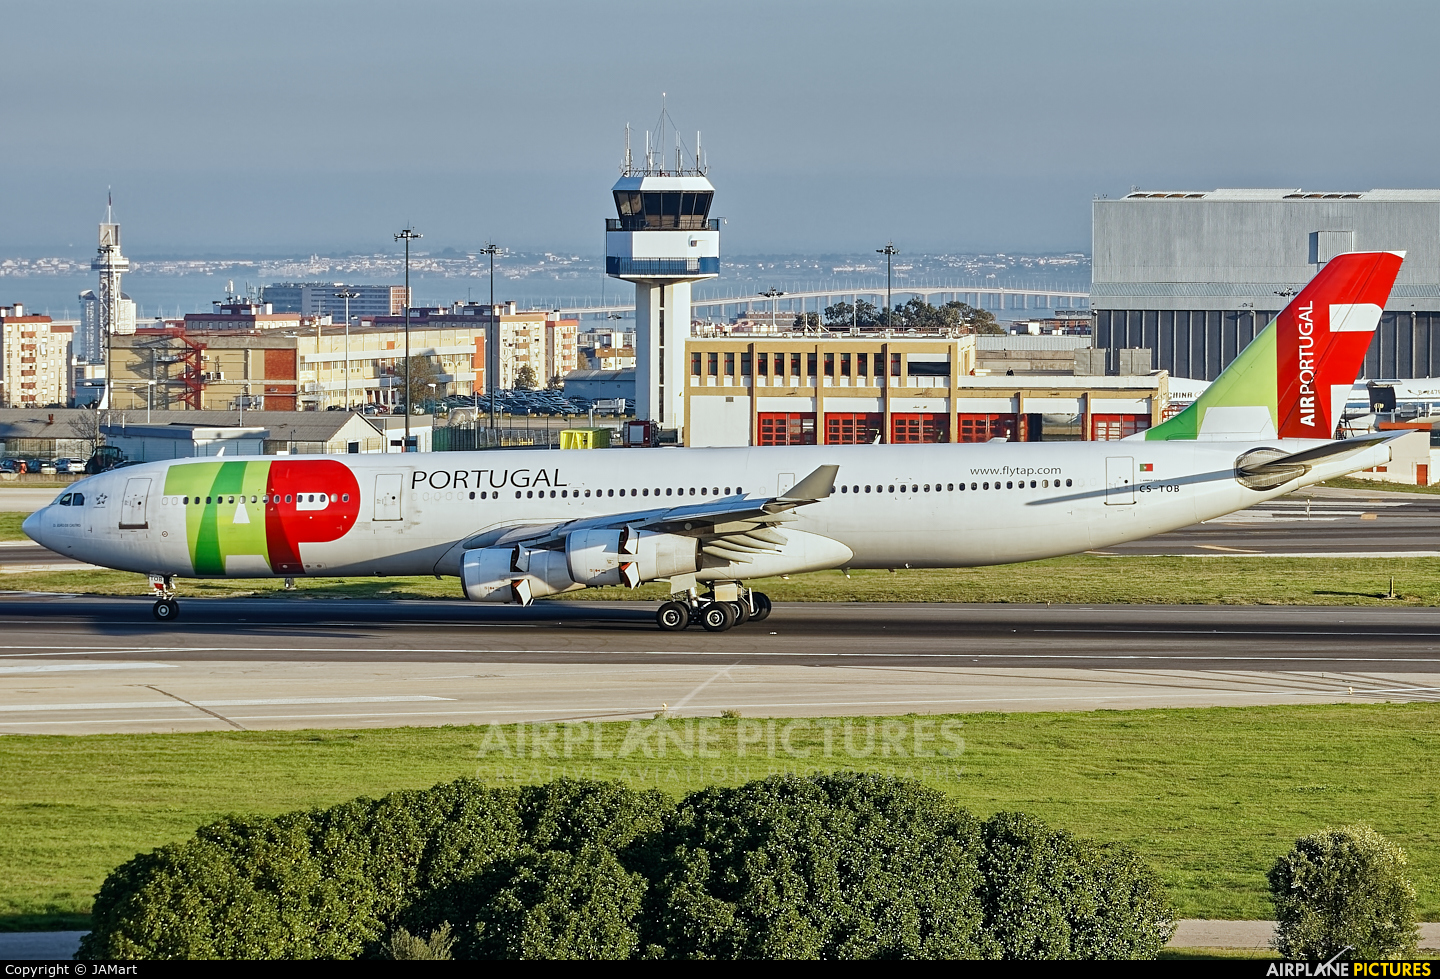 TAP Portugal CS-TOB aircraft at Lisbon